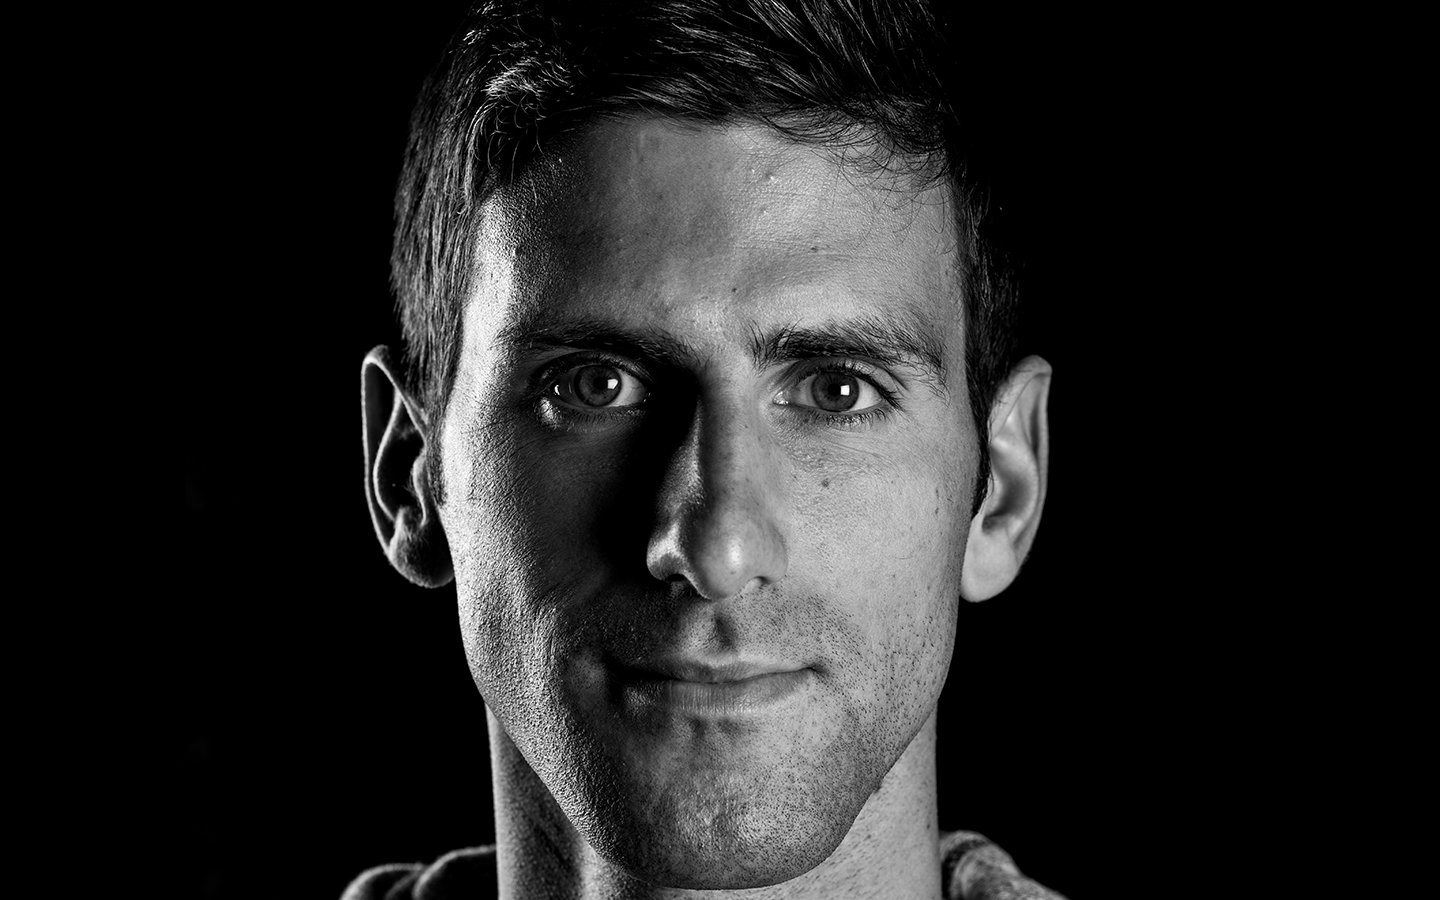 Jorge Diego on Twitter: "Djokovic" / Twitter.